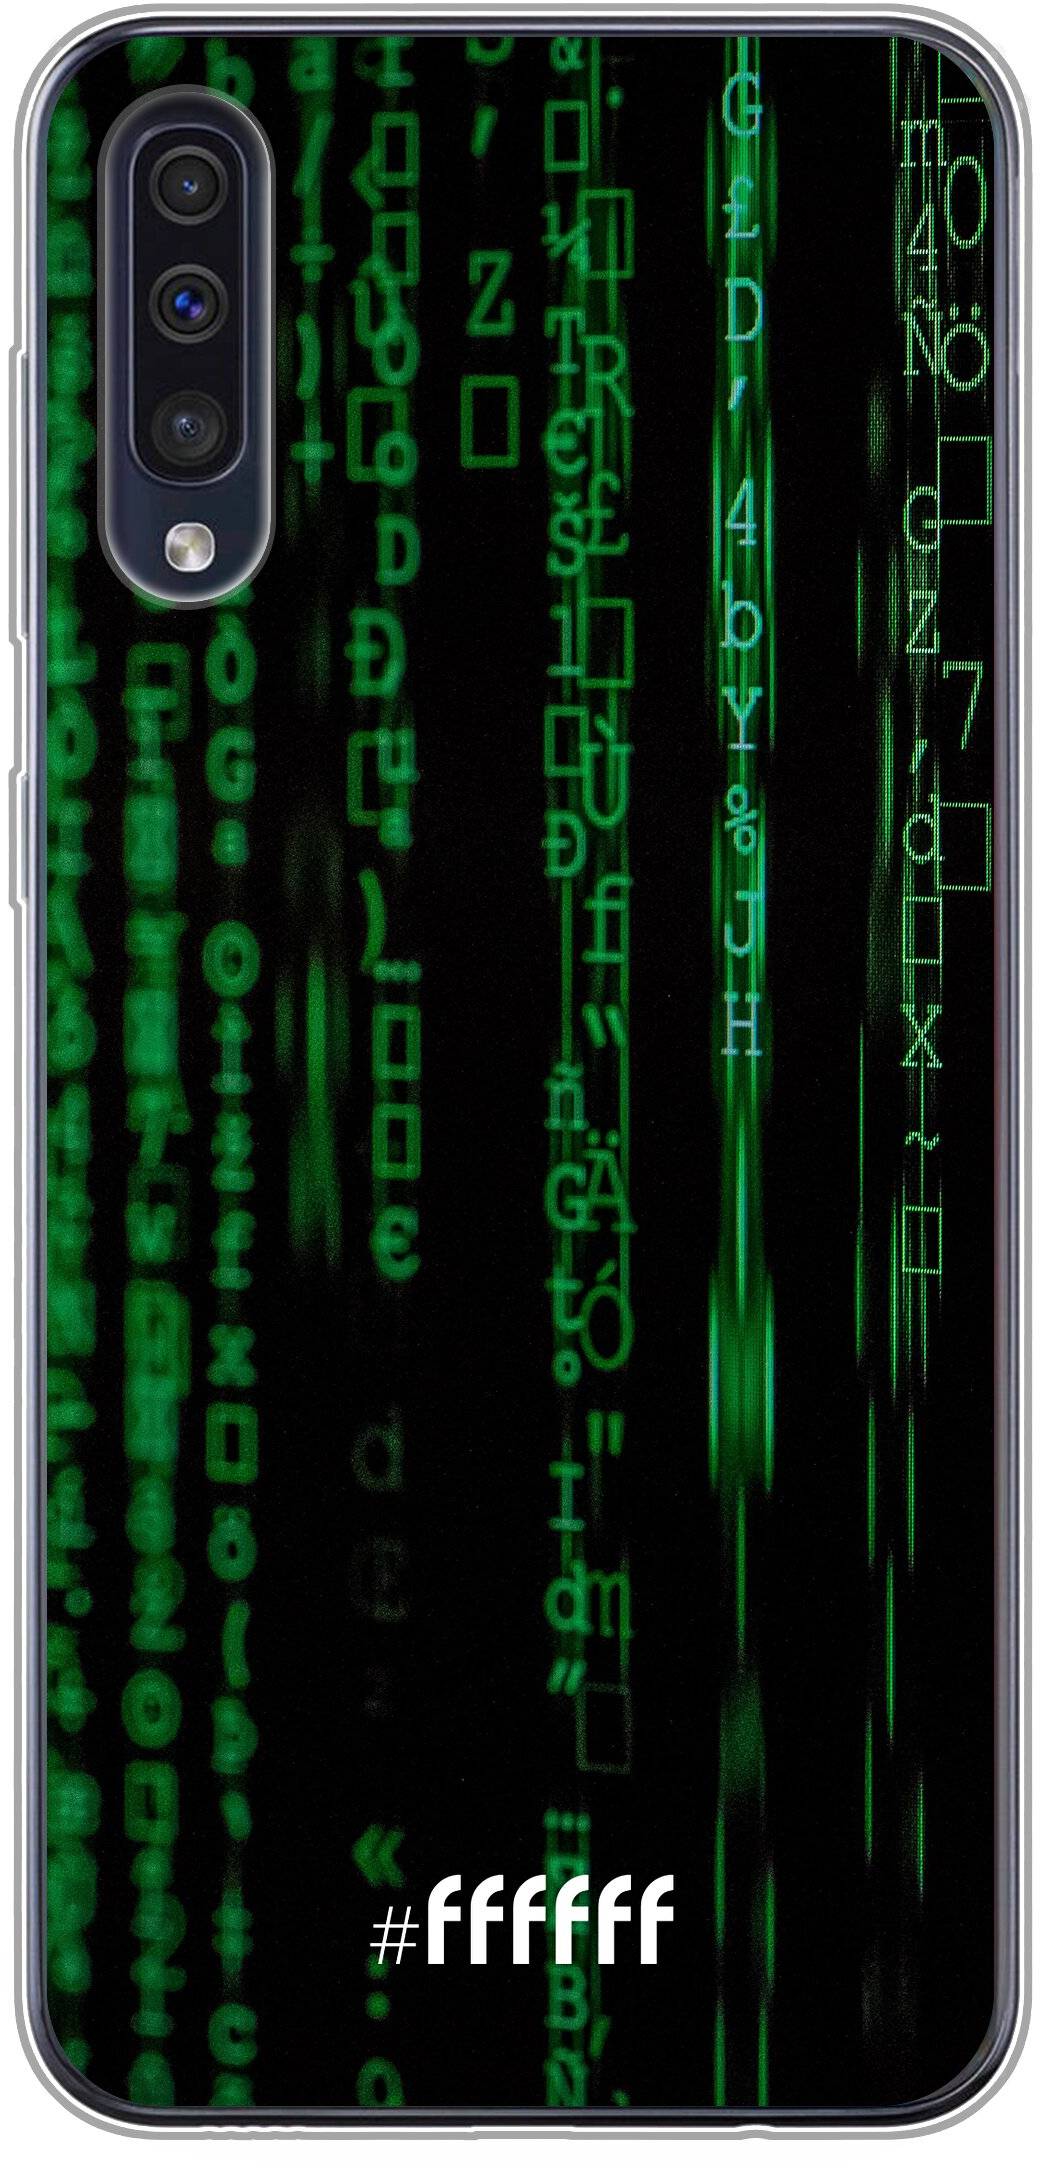 Hacking The Matrix Galaxy A50s